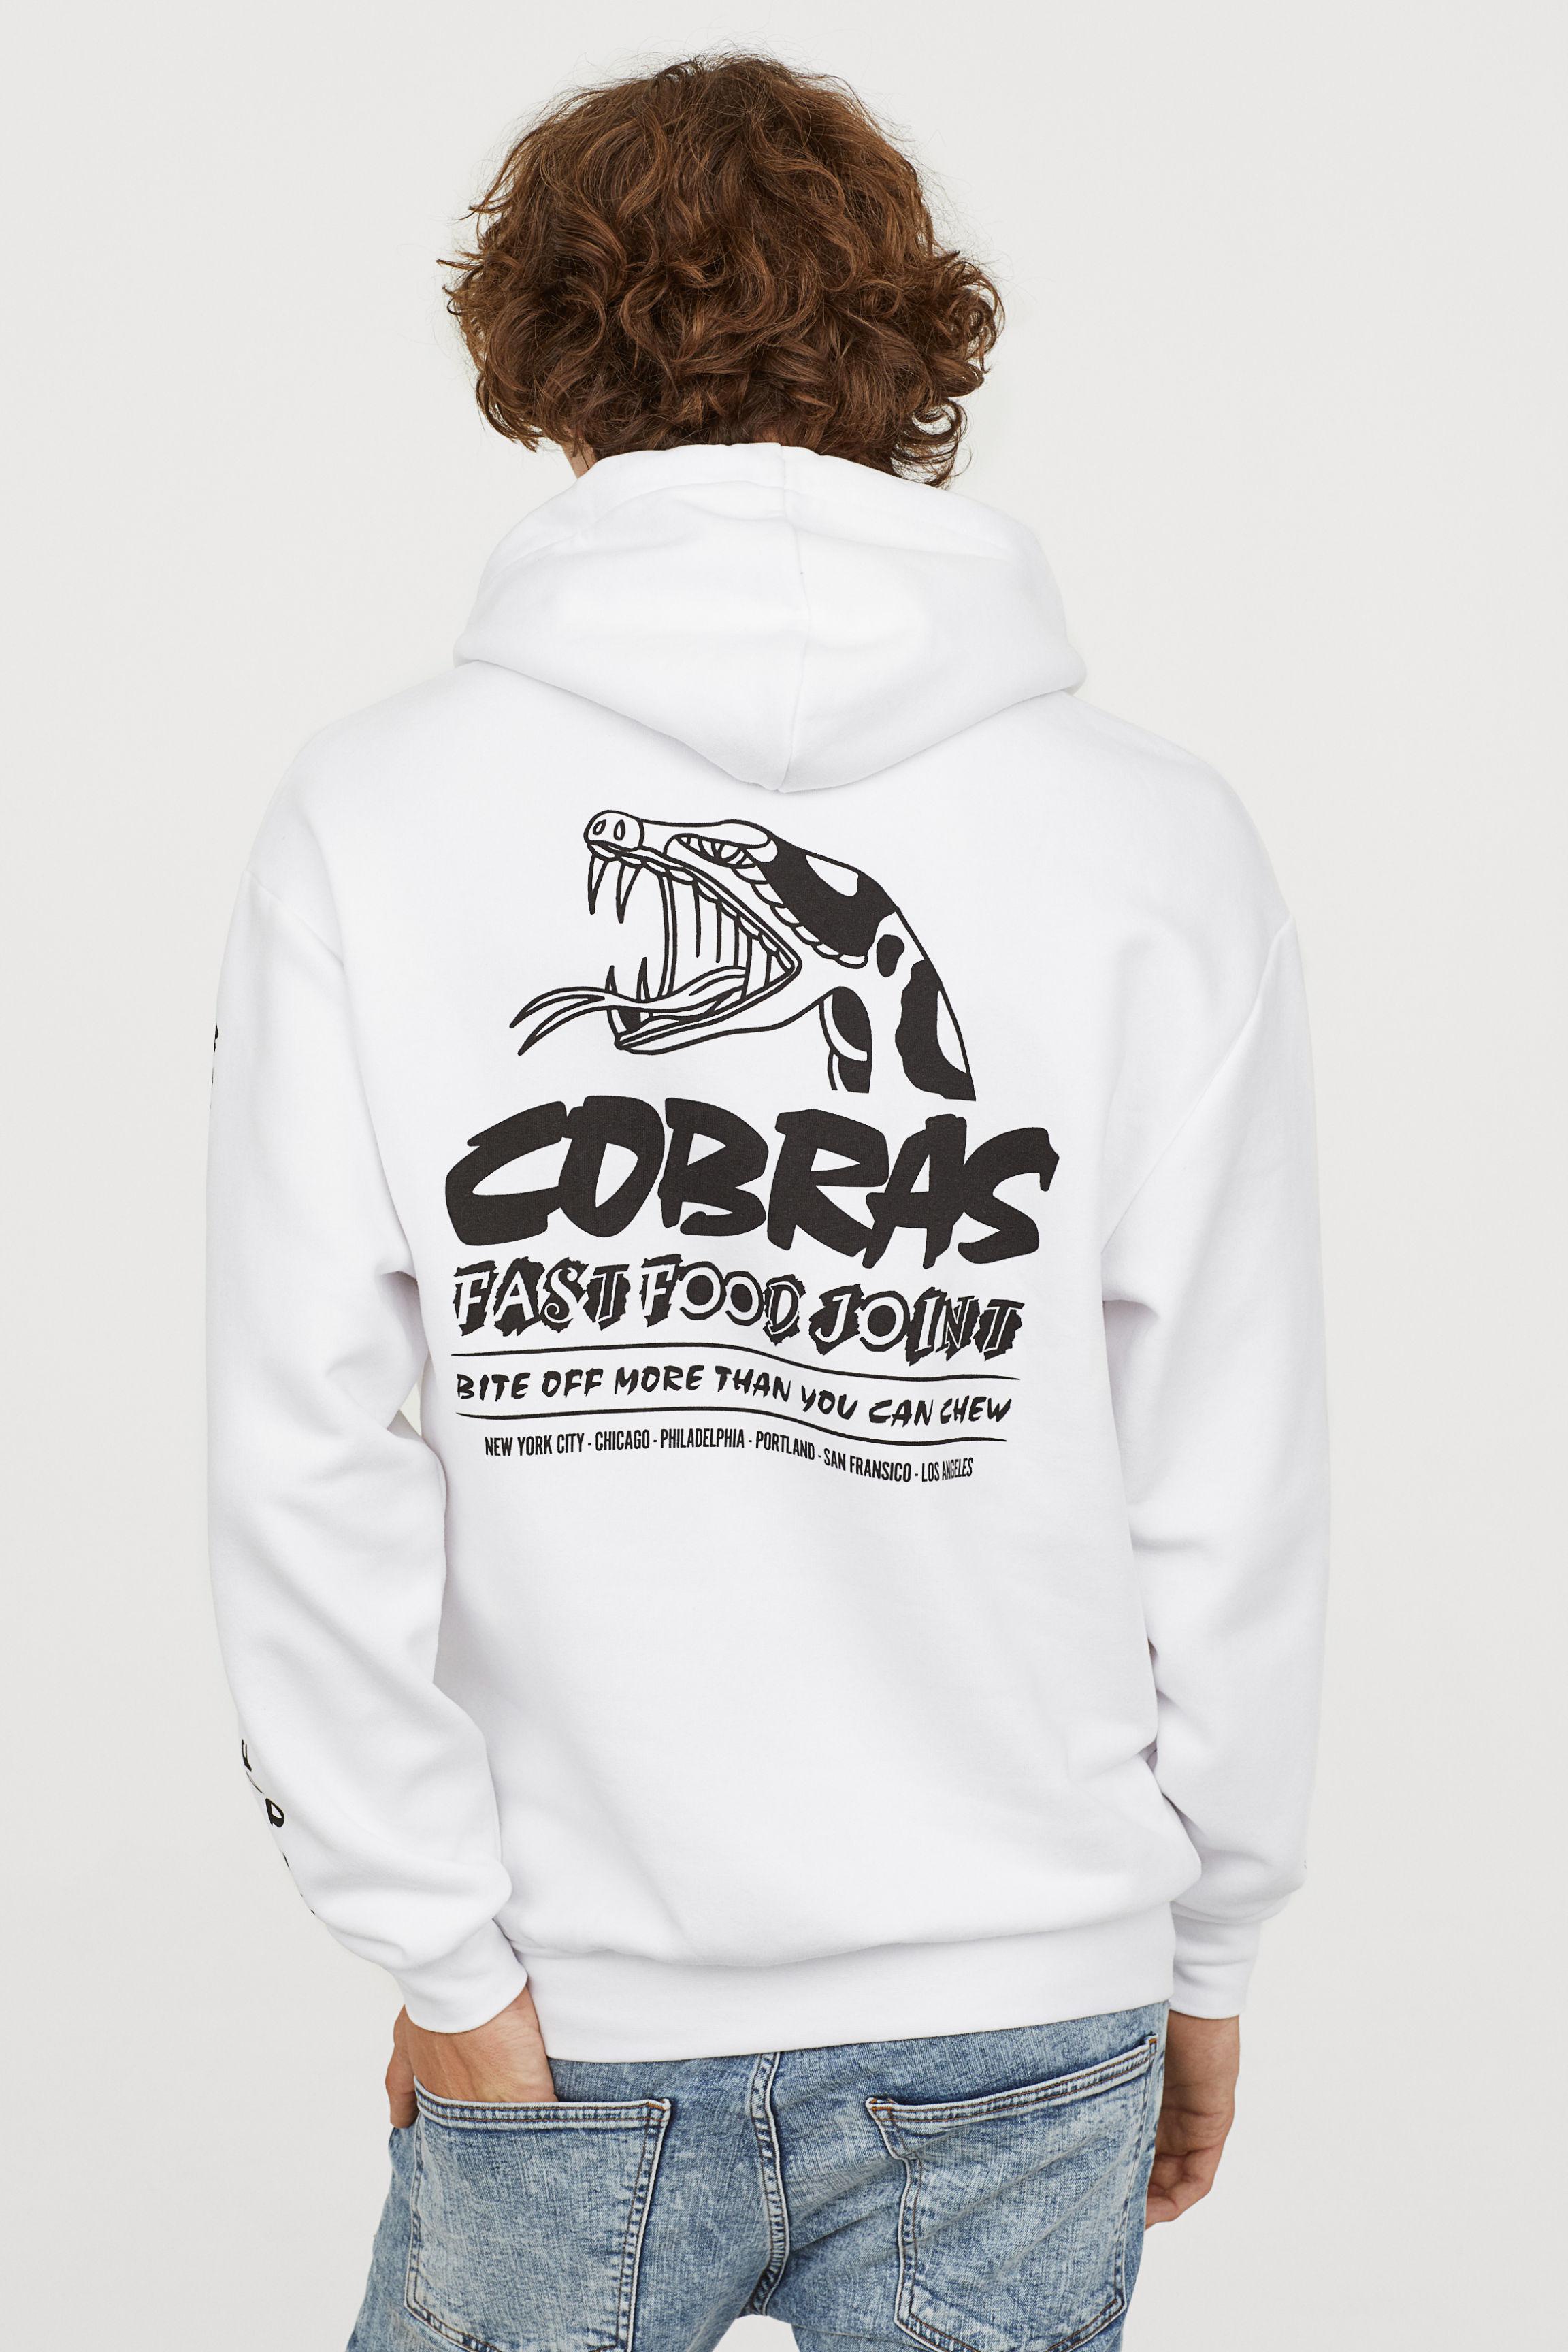 Shopping >h&m cobras shirt big sale - OFF 61%